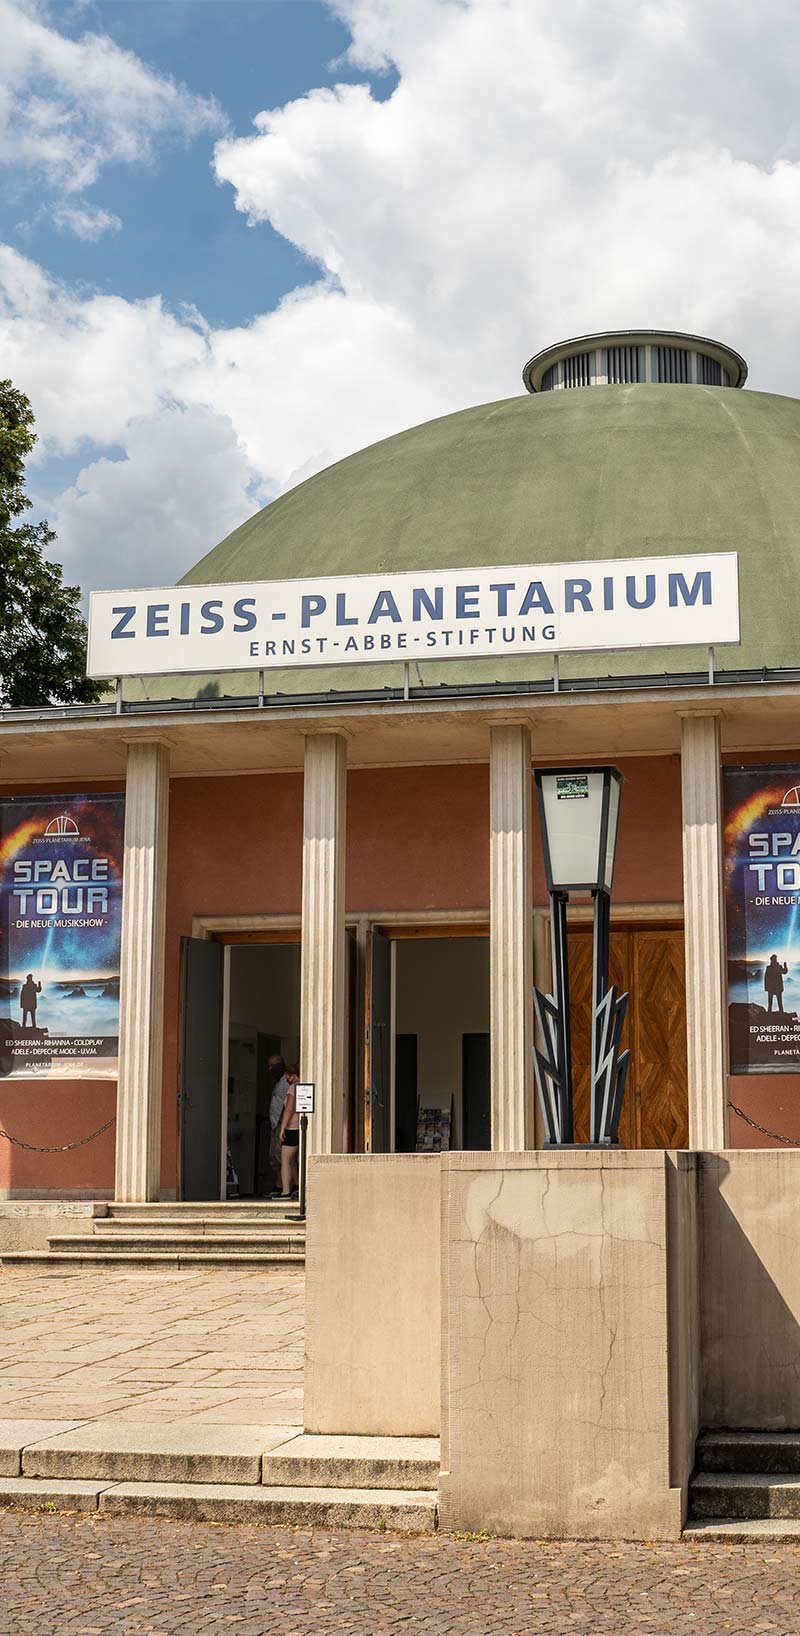 Zeiss planetarium